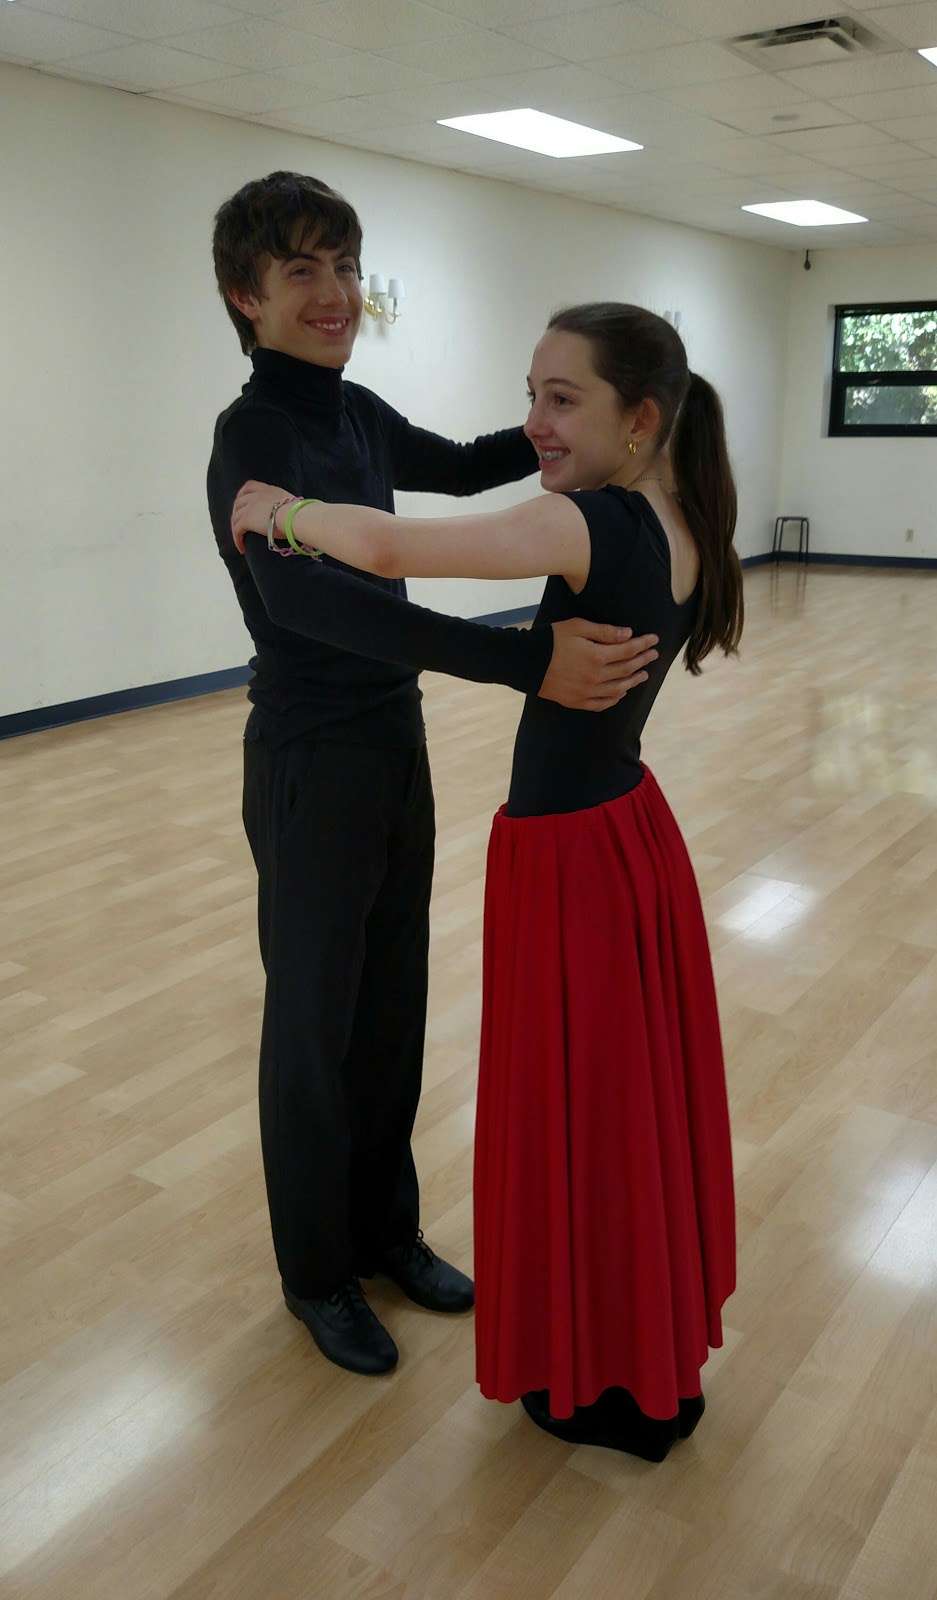 Learn Dance Easily of Danbury | 10 Precision Rd, Danbury, CT 06810 | Phone: (203) 837-7330